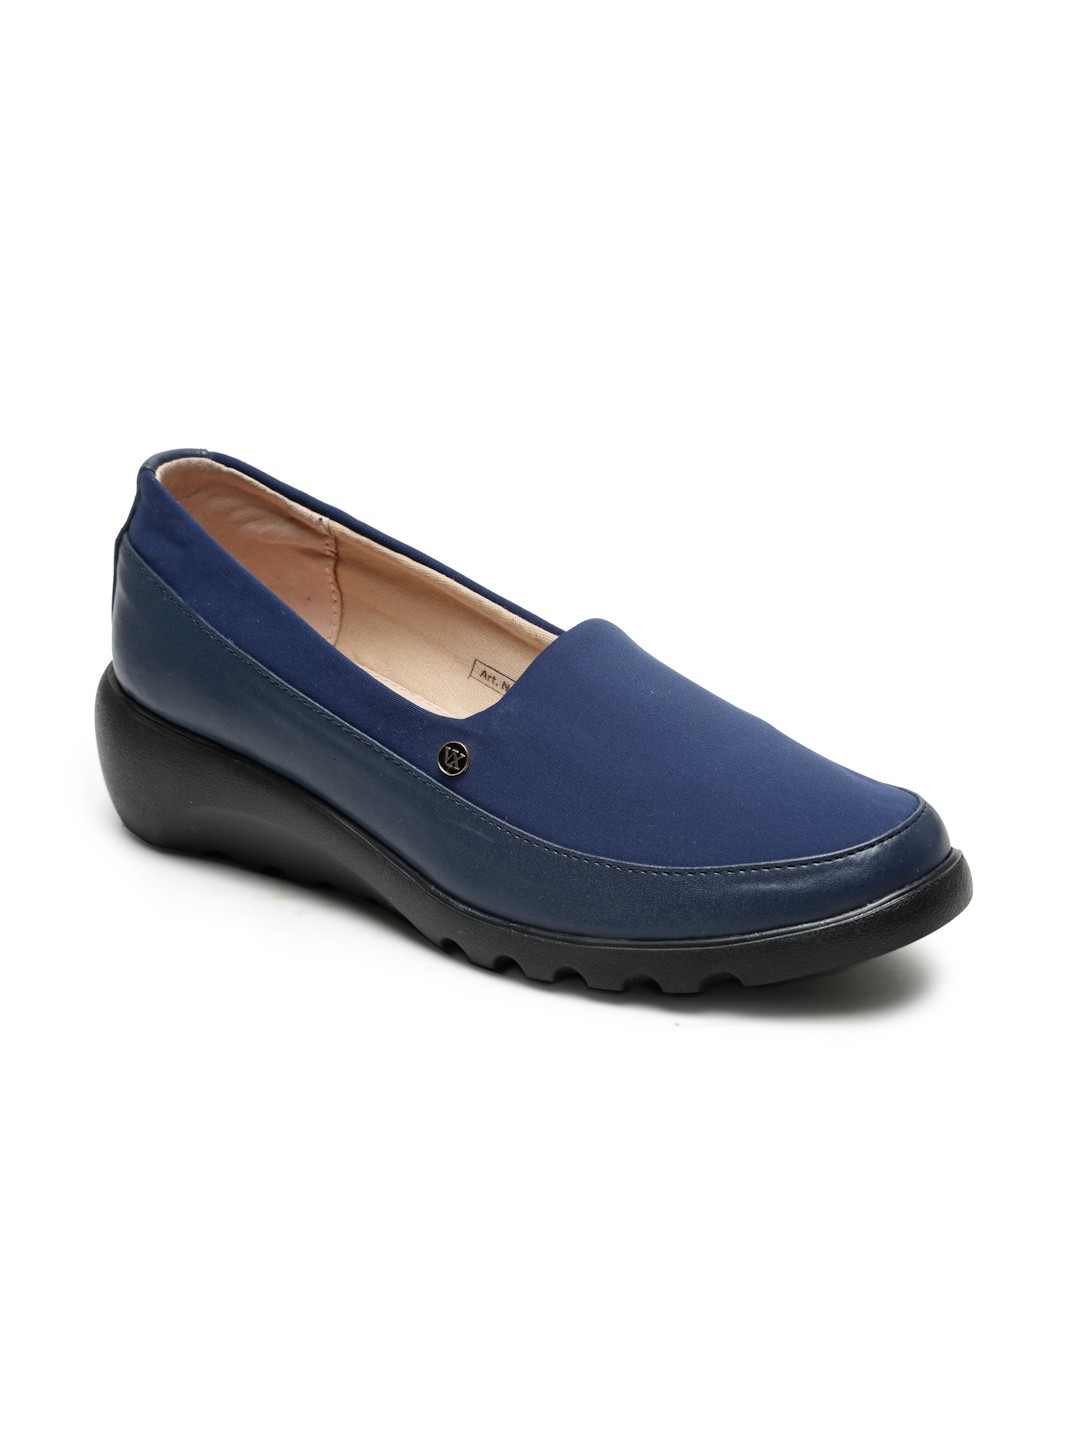 Buy Von Wellx Germany Comfort Women's Blue Casual Shoes Elsa Online in Chandigarh